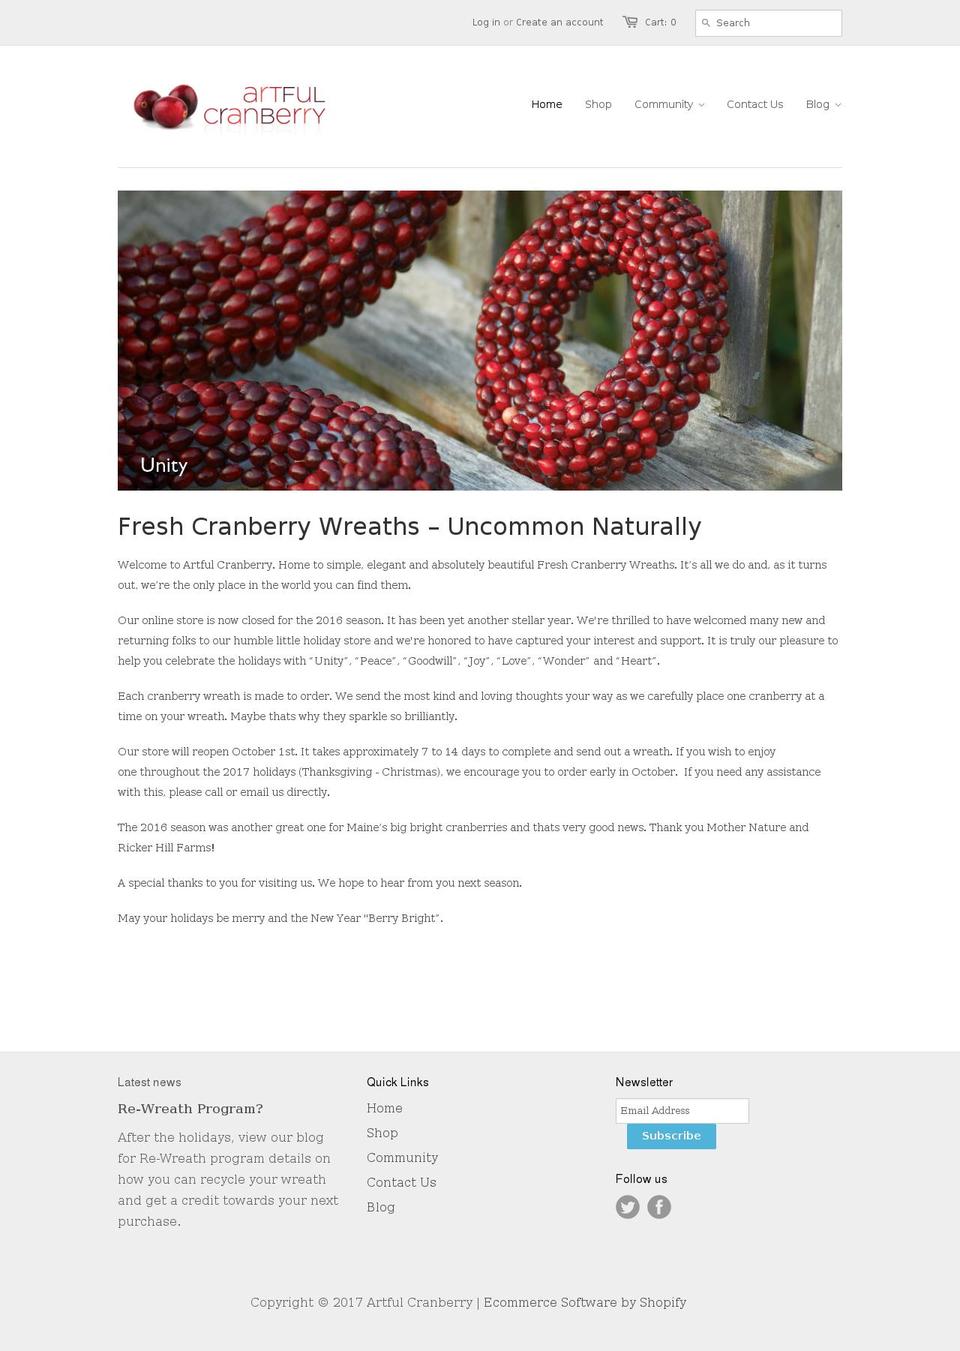 freshcranberrywreaths.com shopify website screenshot